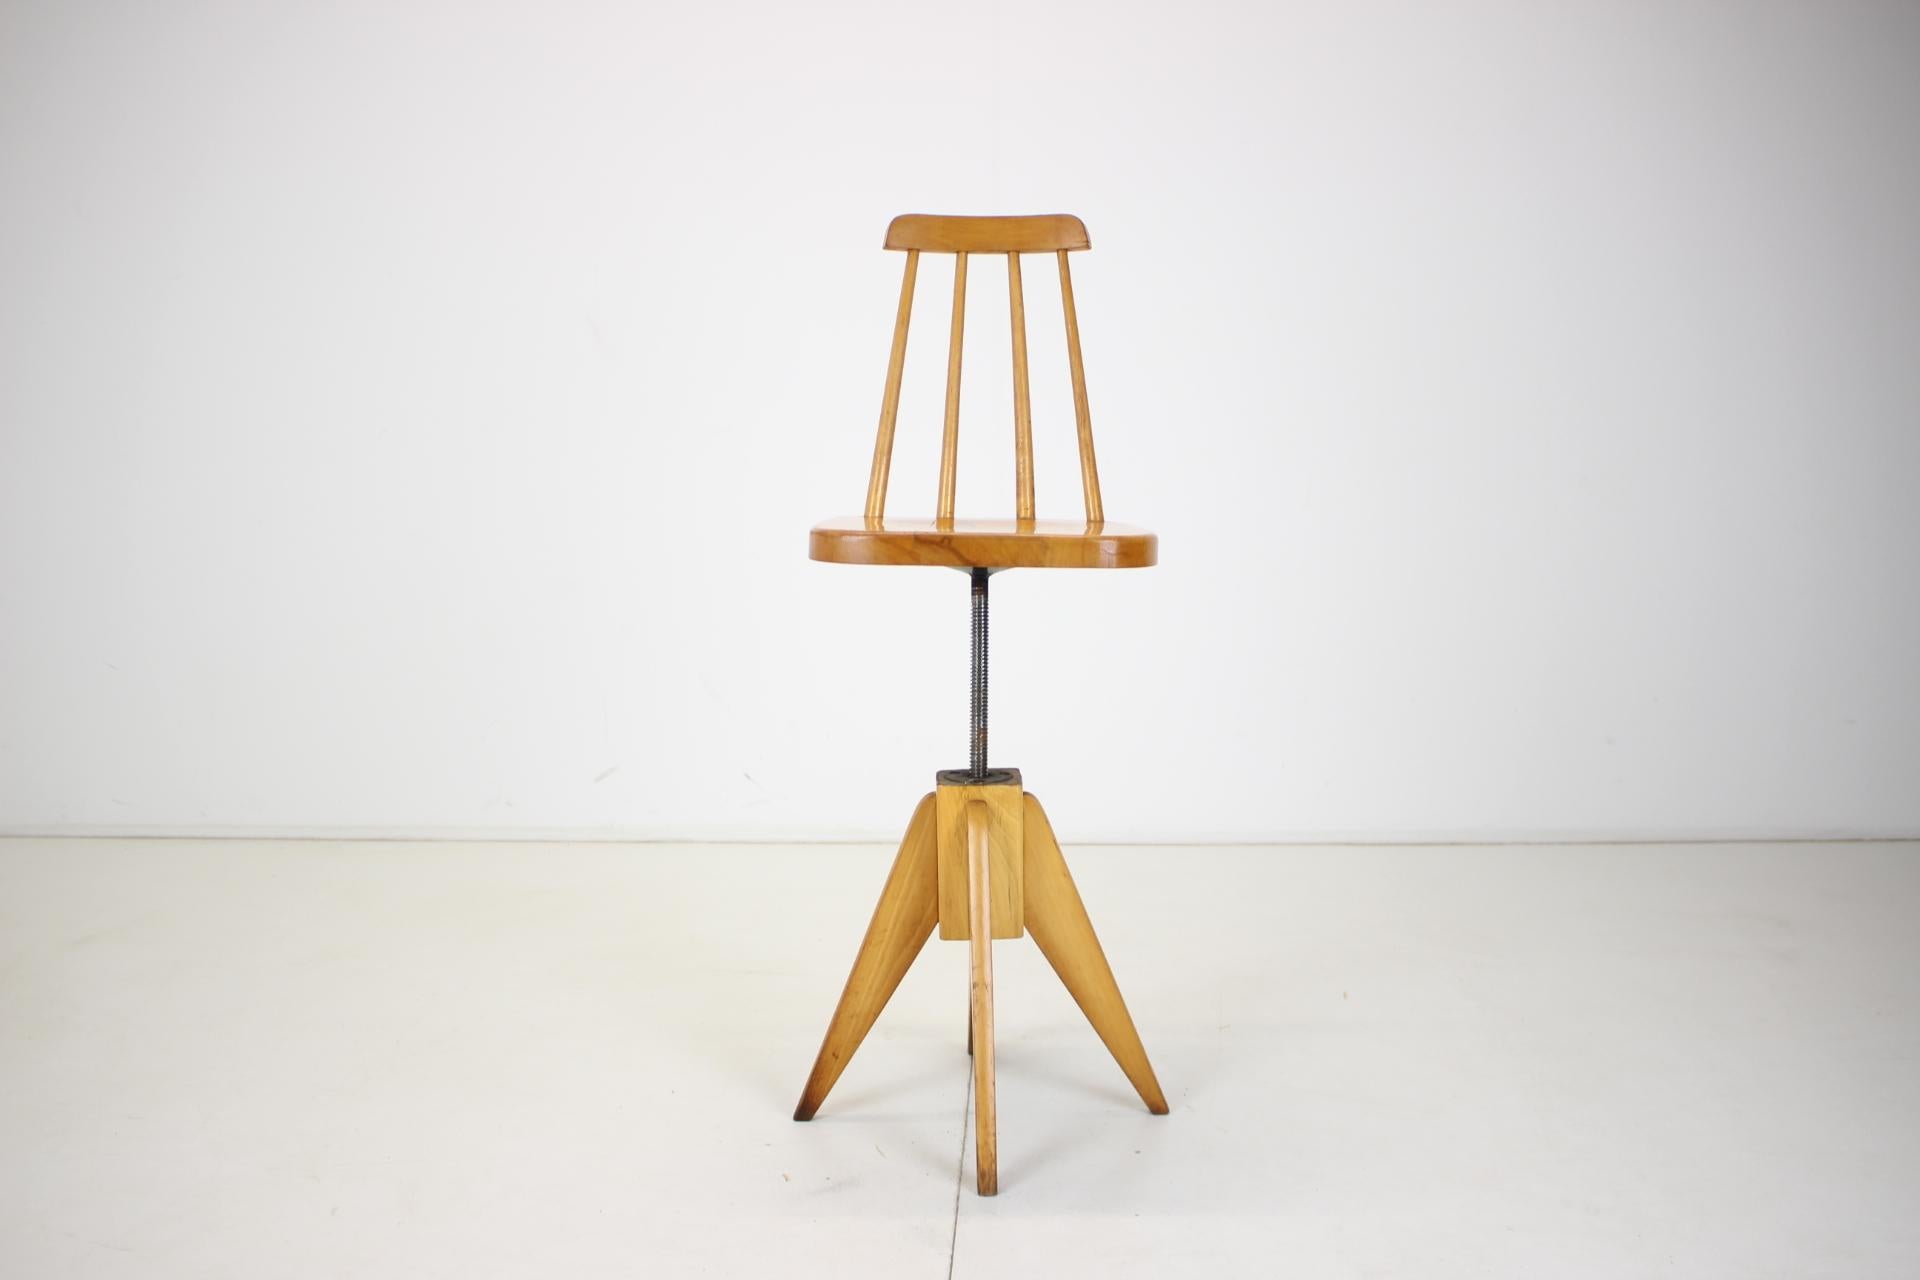 Midcentury Wood Revolving Chair, Czechoslovakia, 1970s For Sale 4